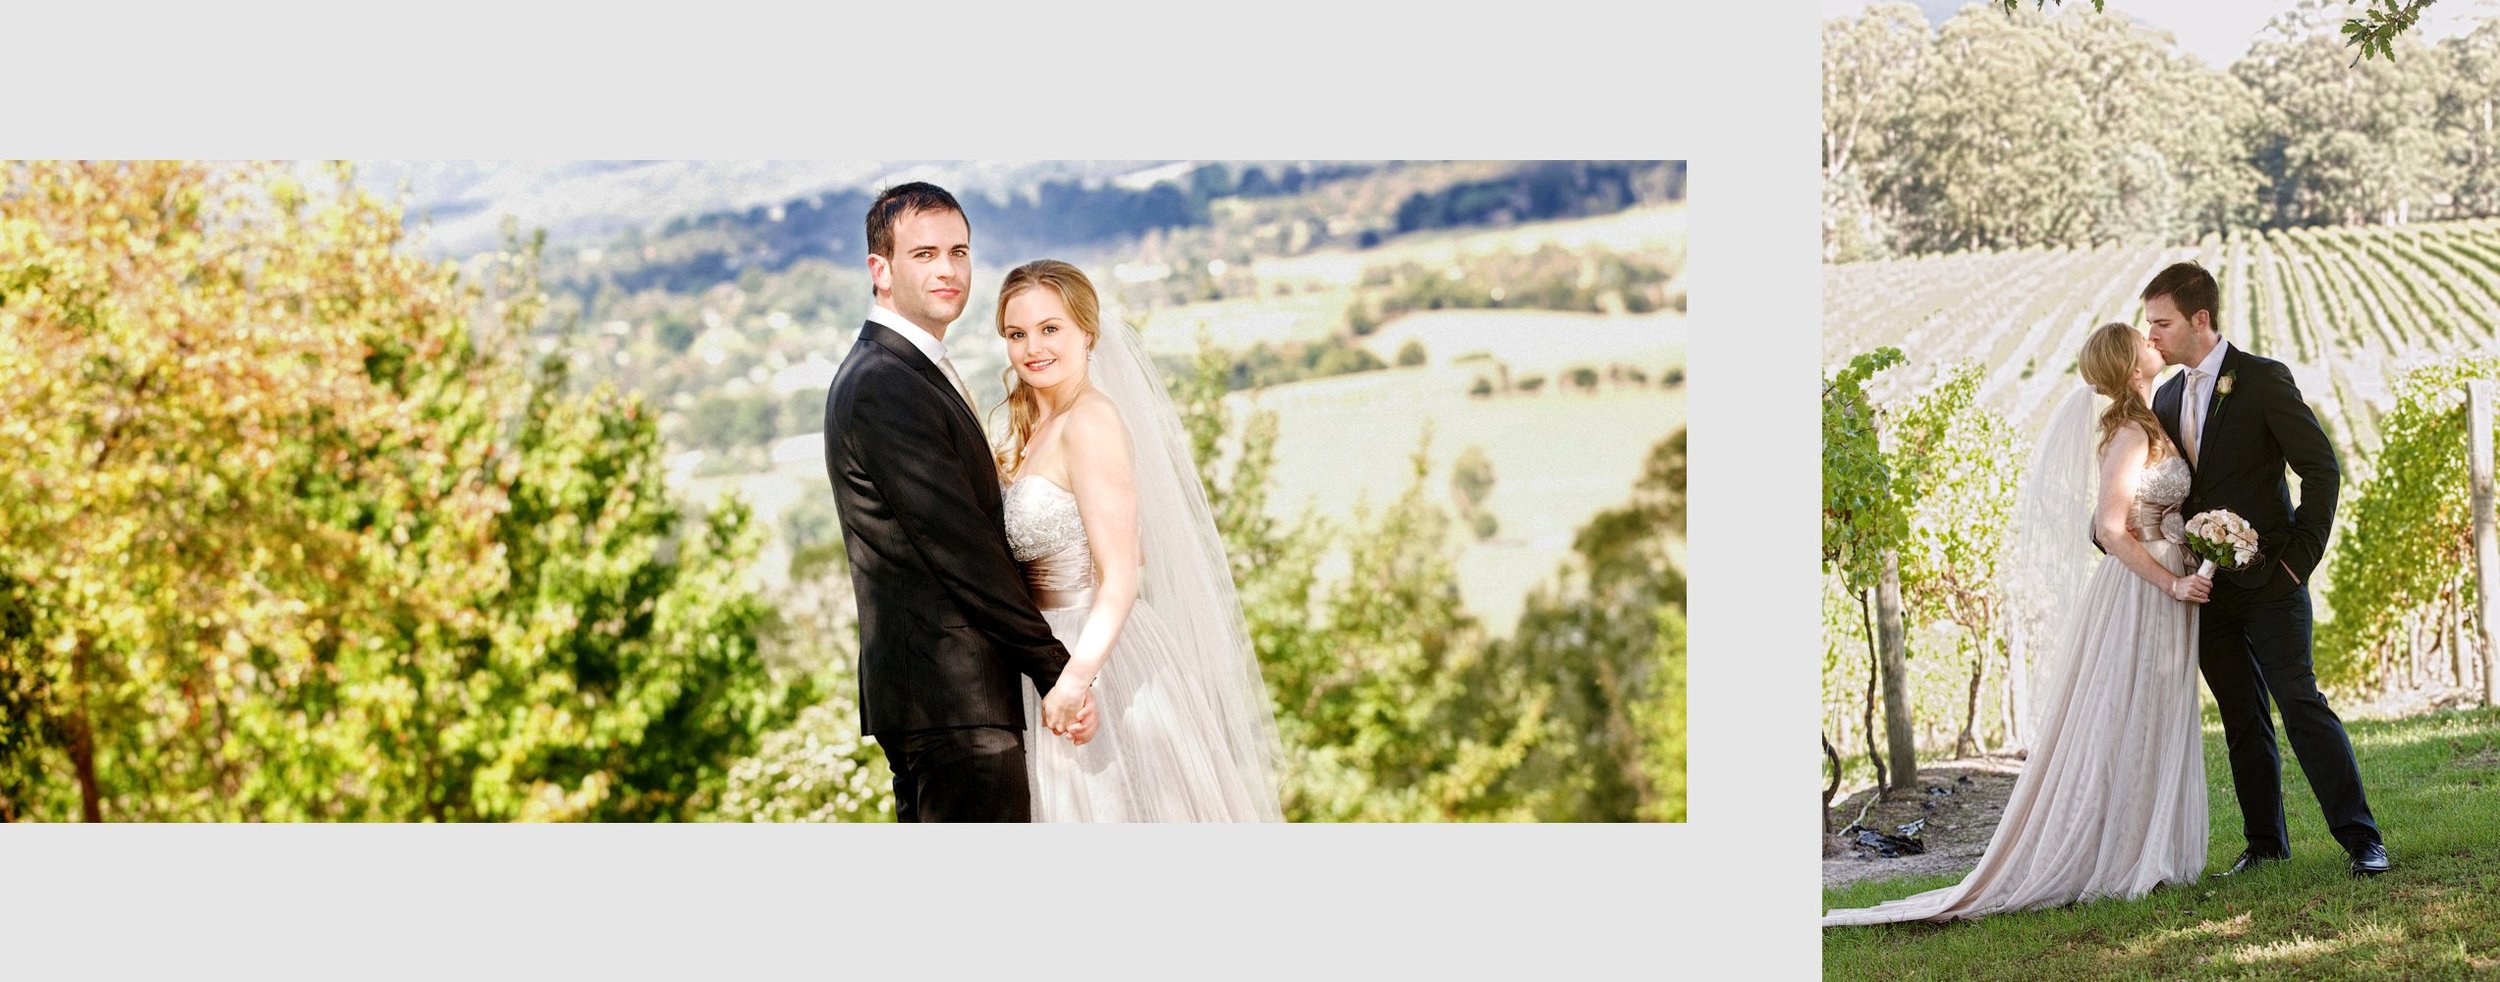 professional wedding photo albums Adelaide